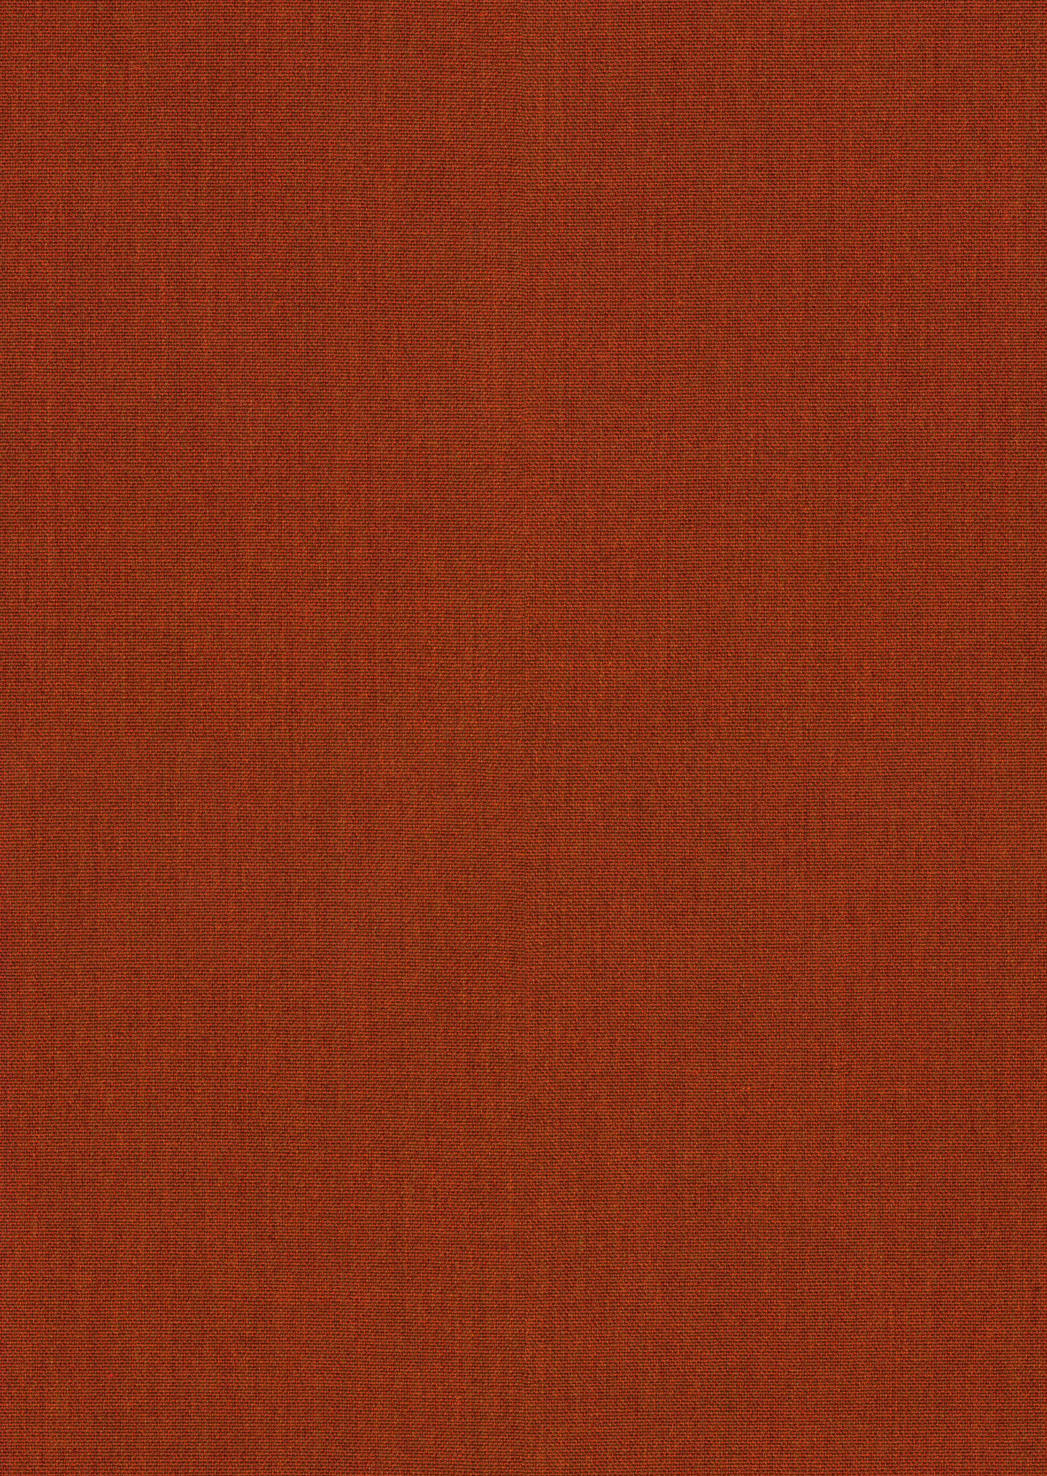 Fabric sample Remix 3 443 orange